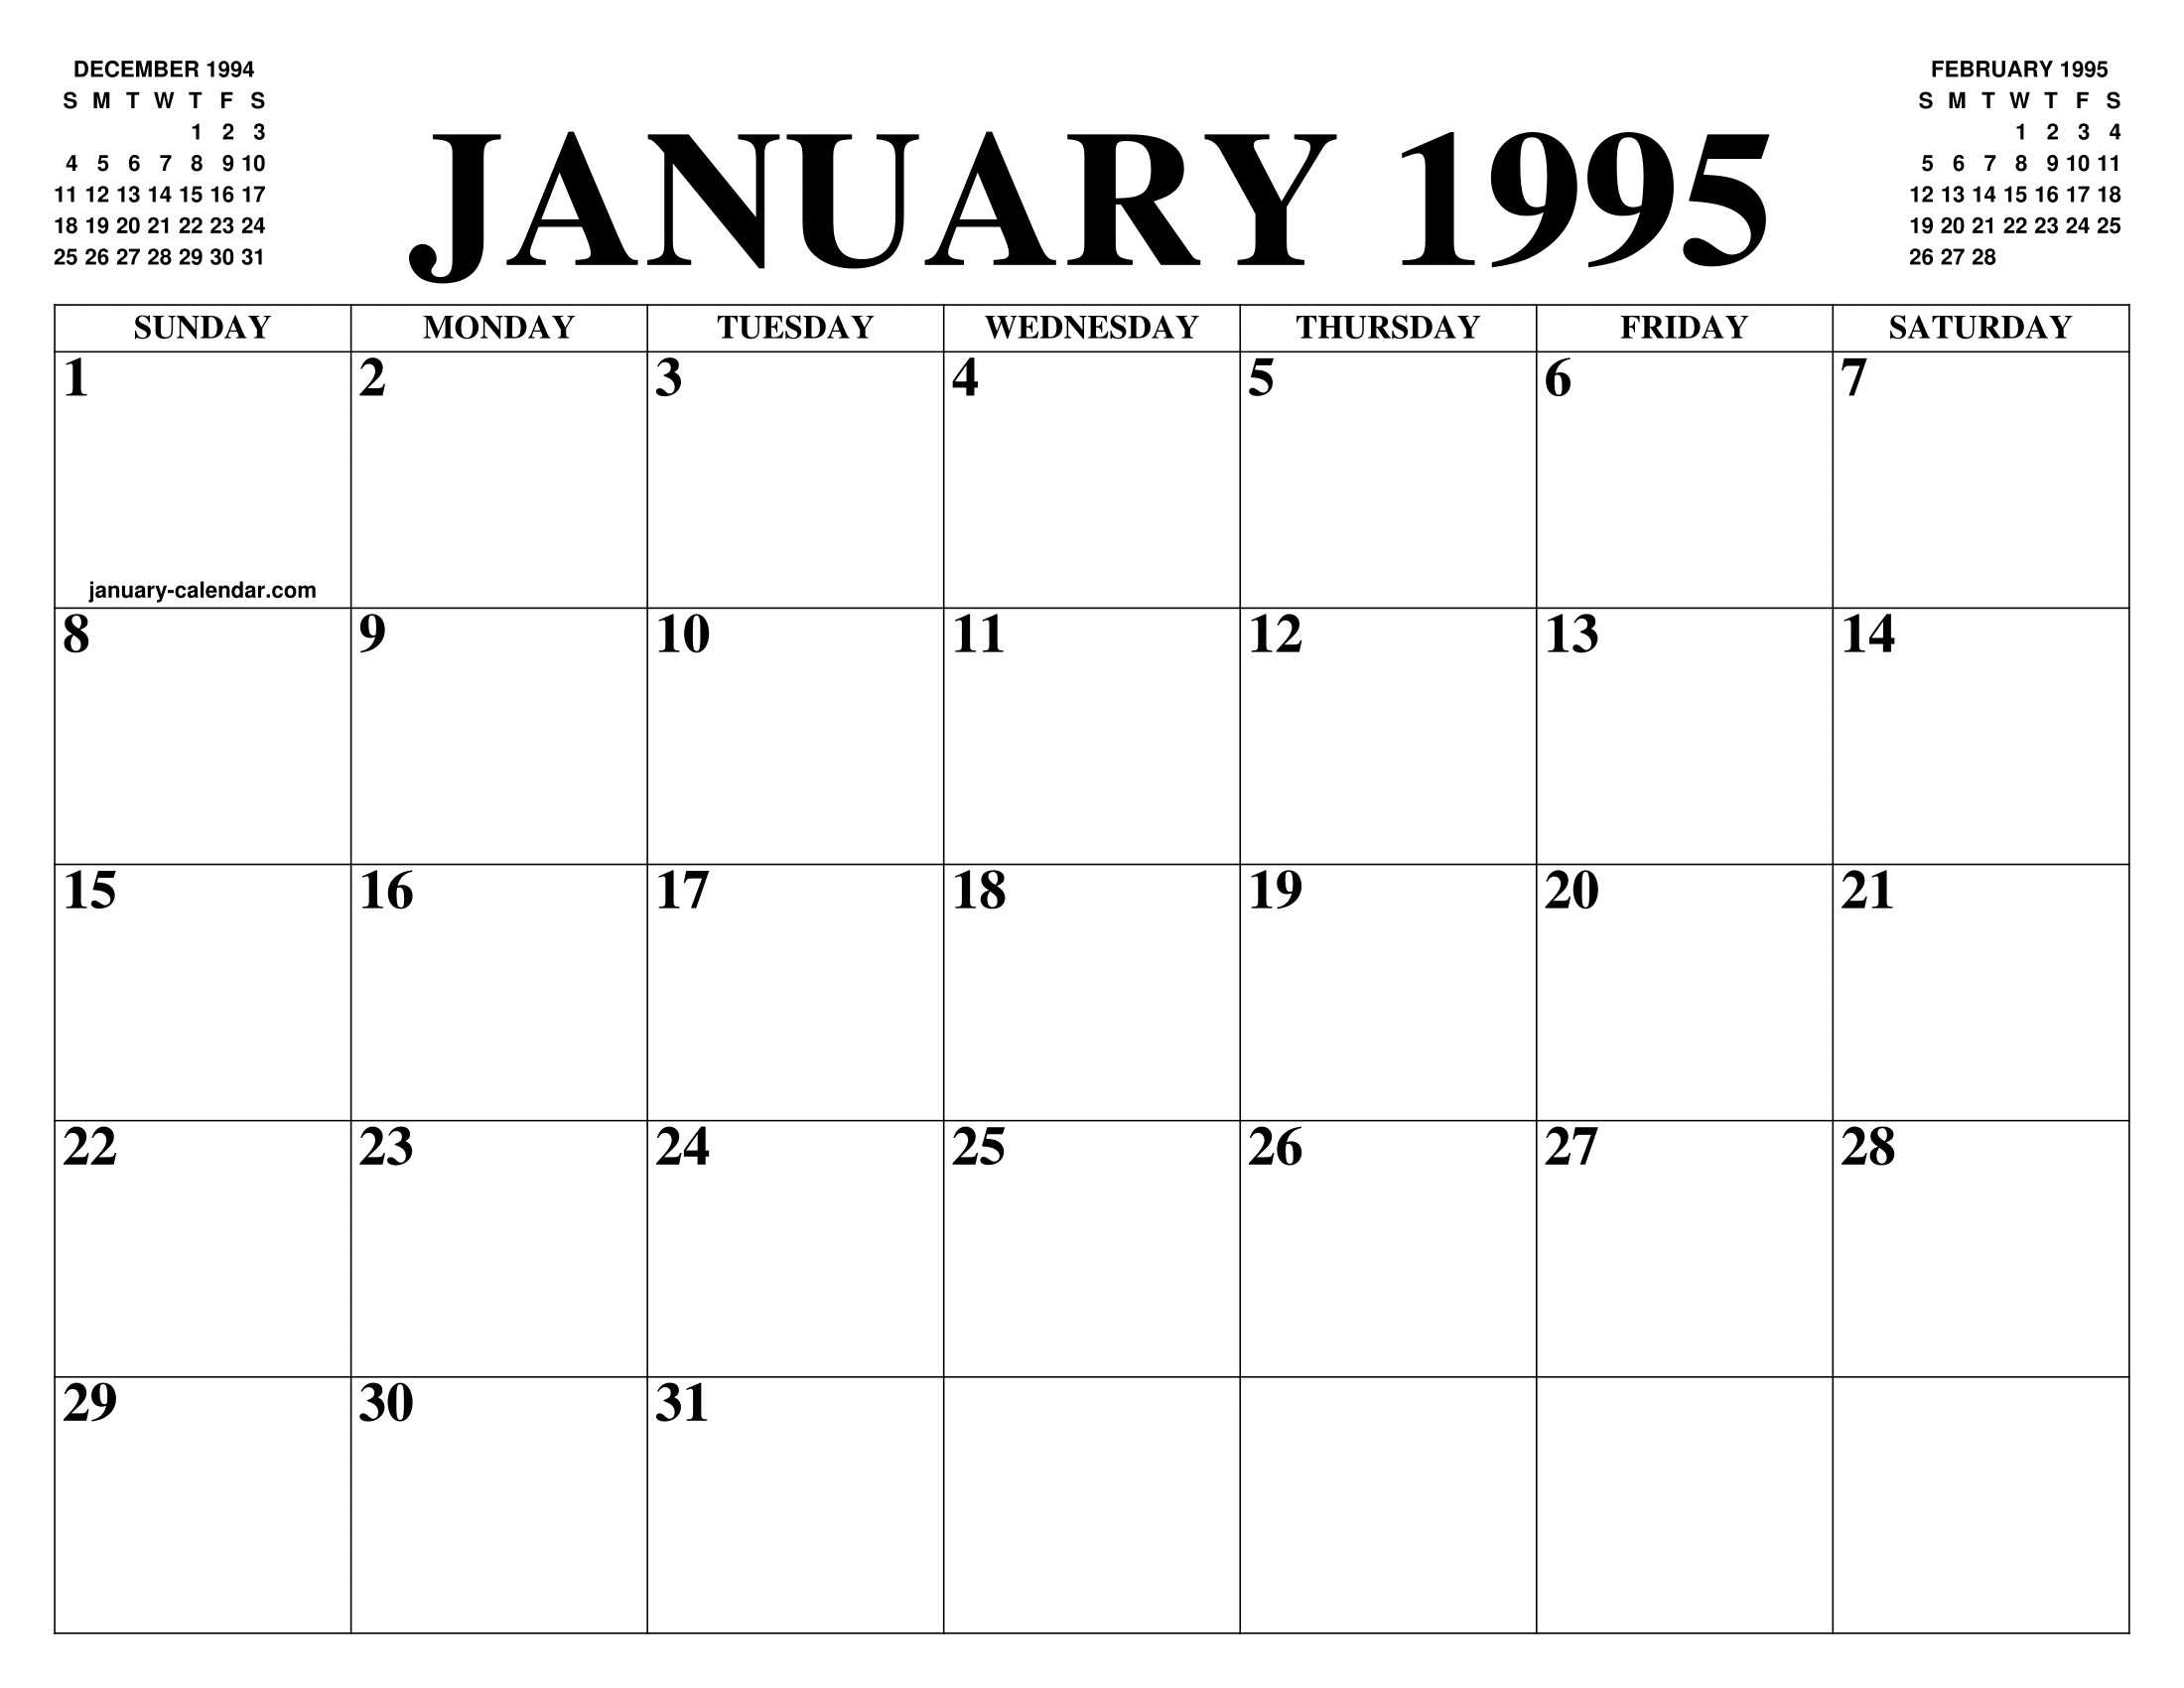 JANUARY 1995 CALENDAR OF THE MONTH FREE PRINTABLE JANUARY CALENDAR OF